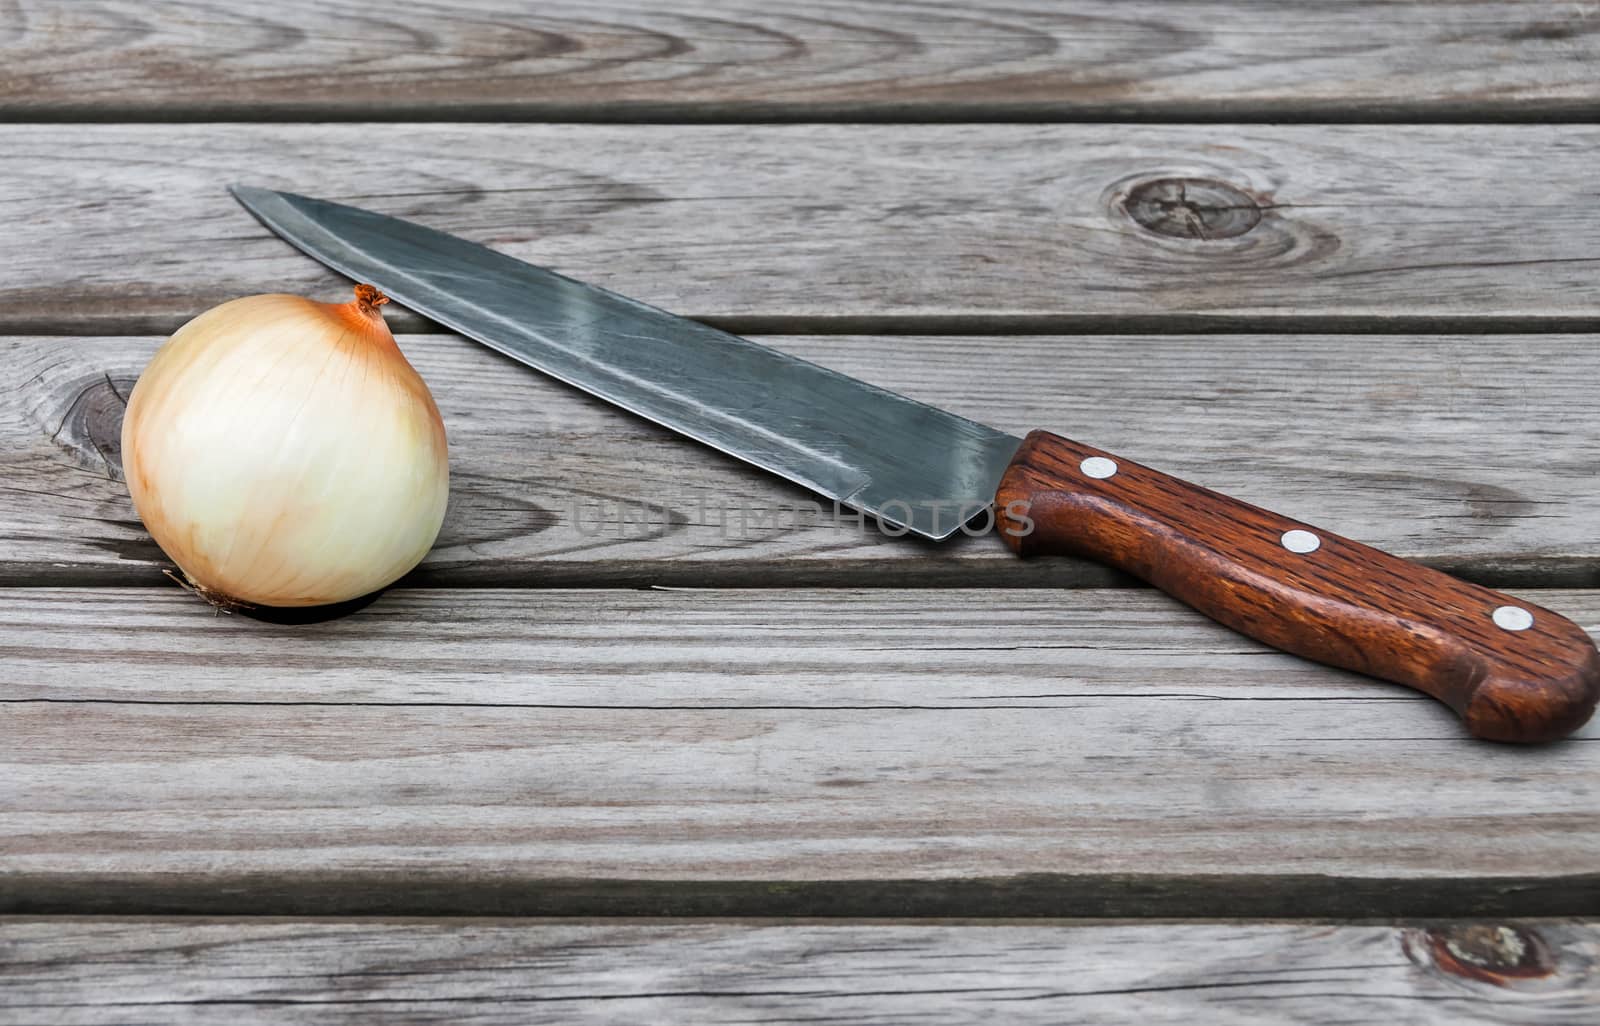 Knife,onion on a table by zeffss